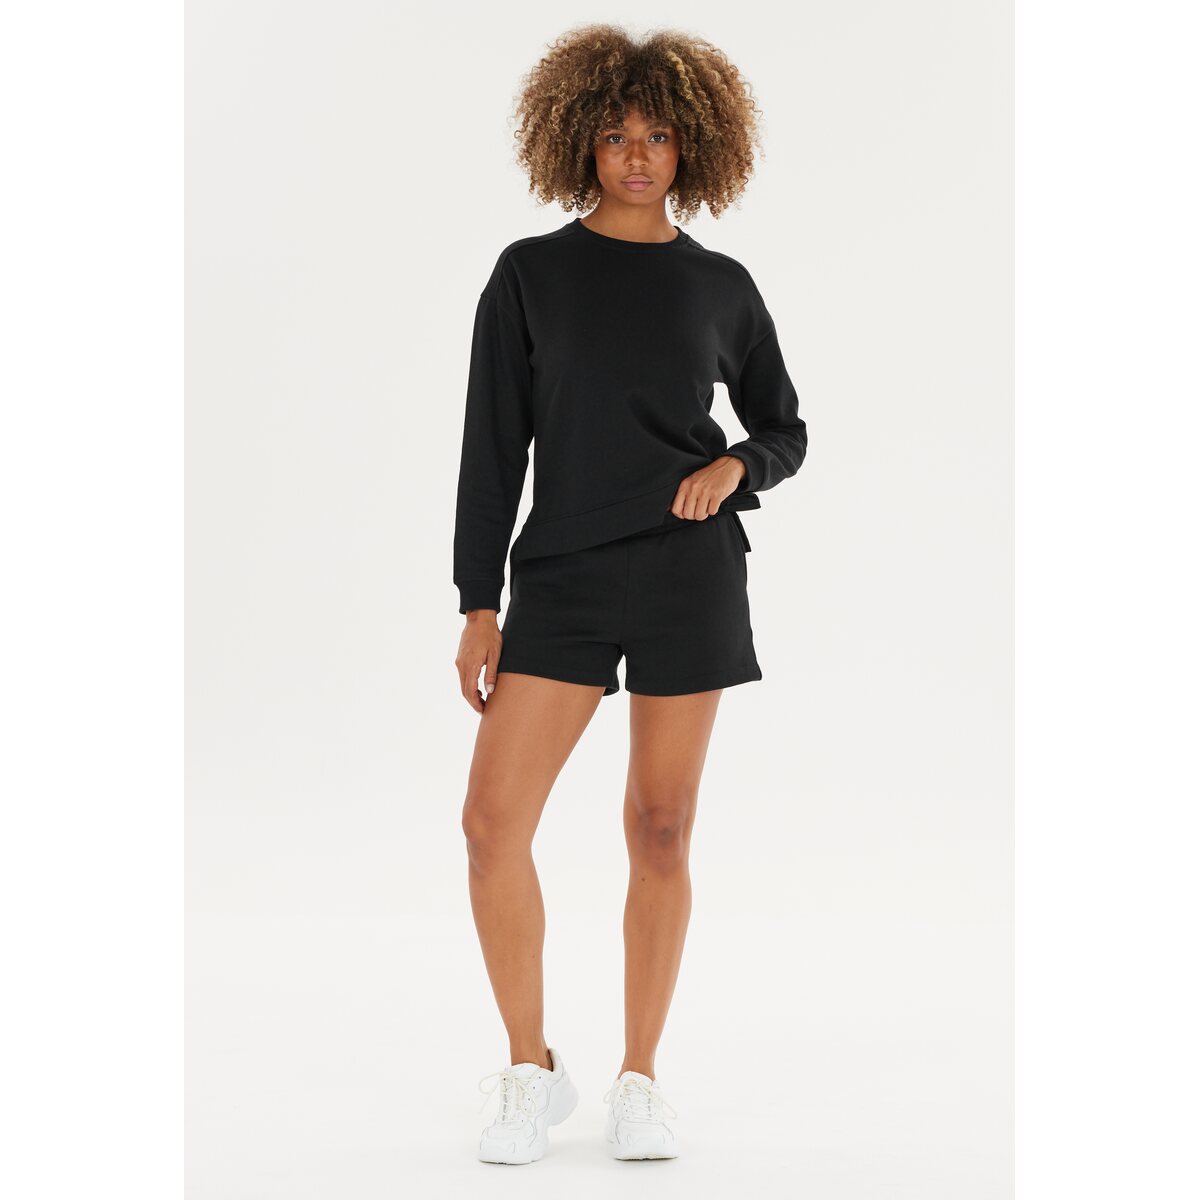 Athlecia Ruthie Womenswear Shorts - Black 1 Shaws Department Stores